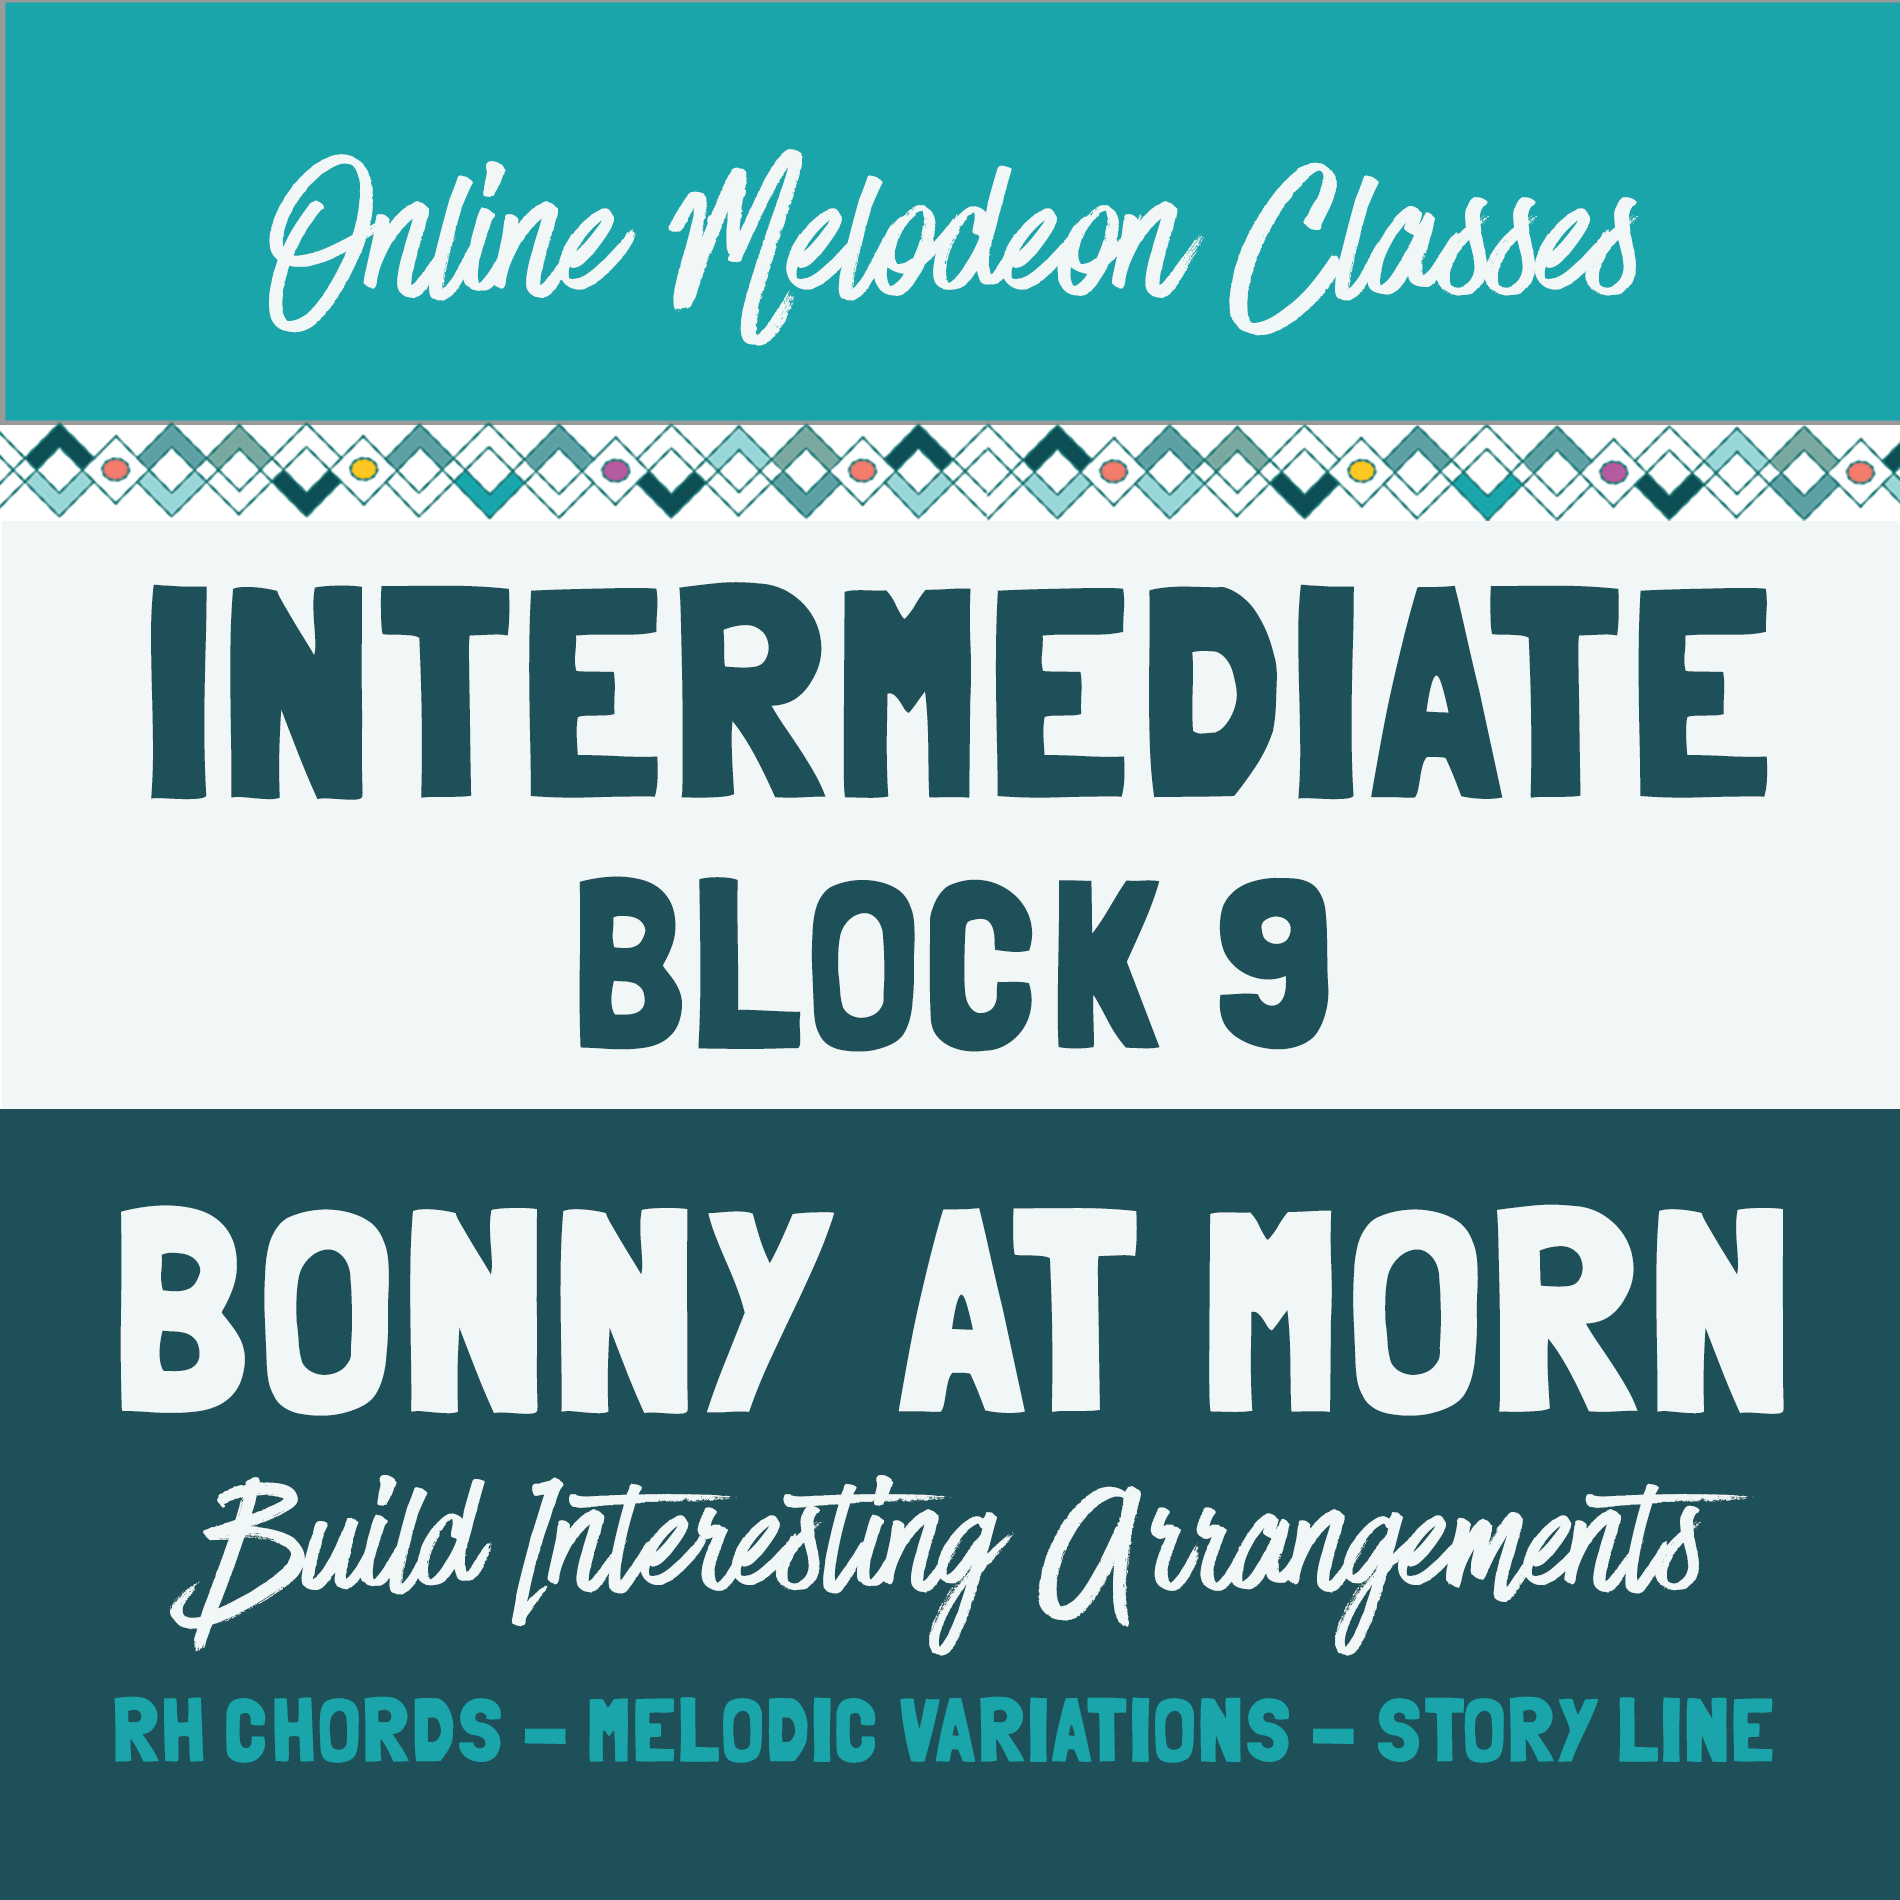 The Melodeon Zone: Intermediate Classes Block 9